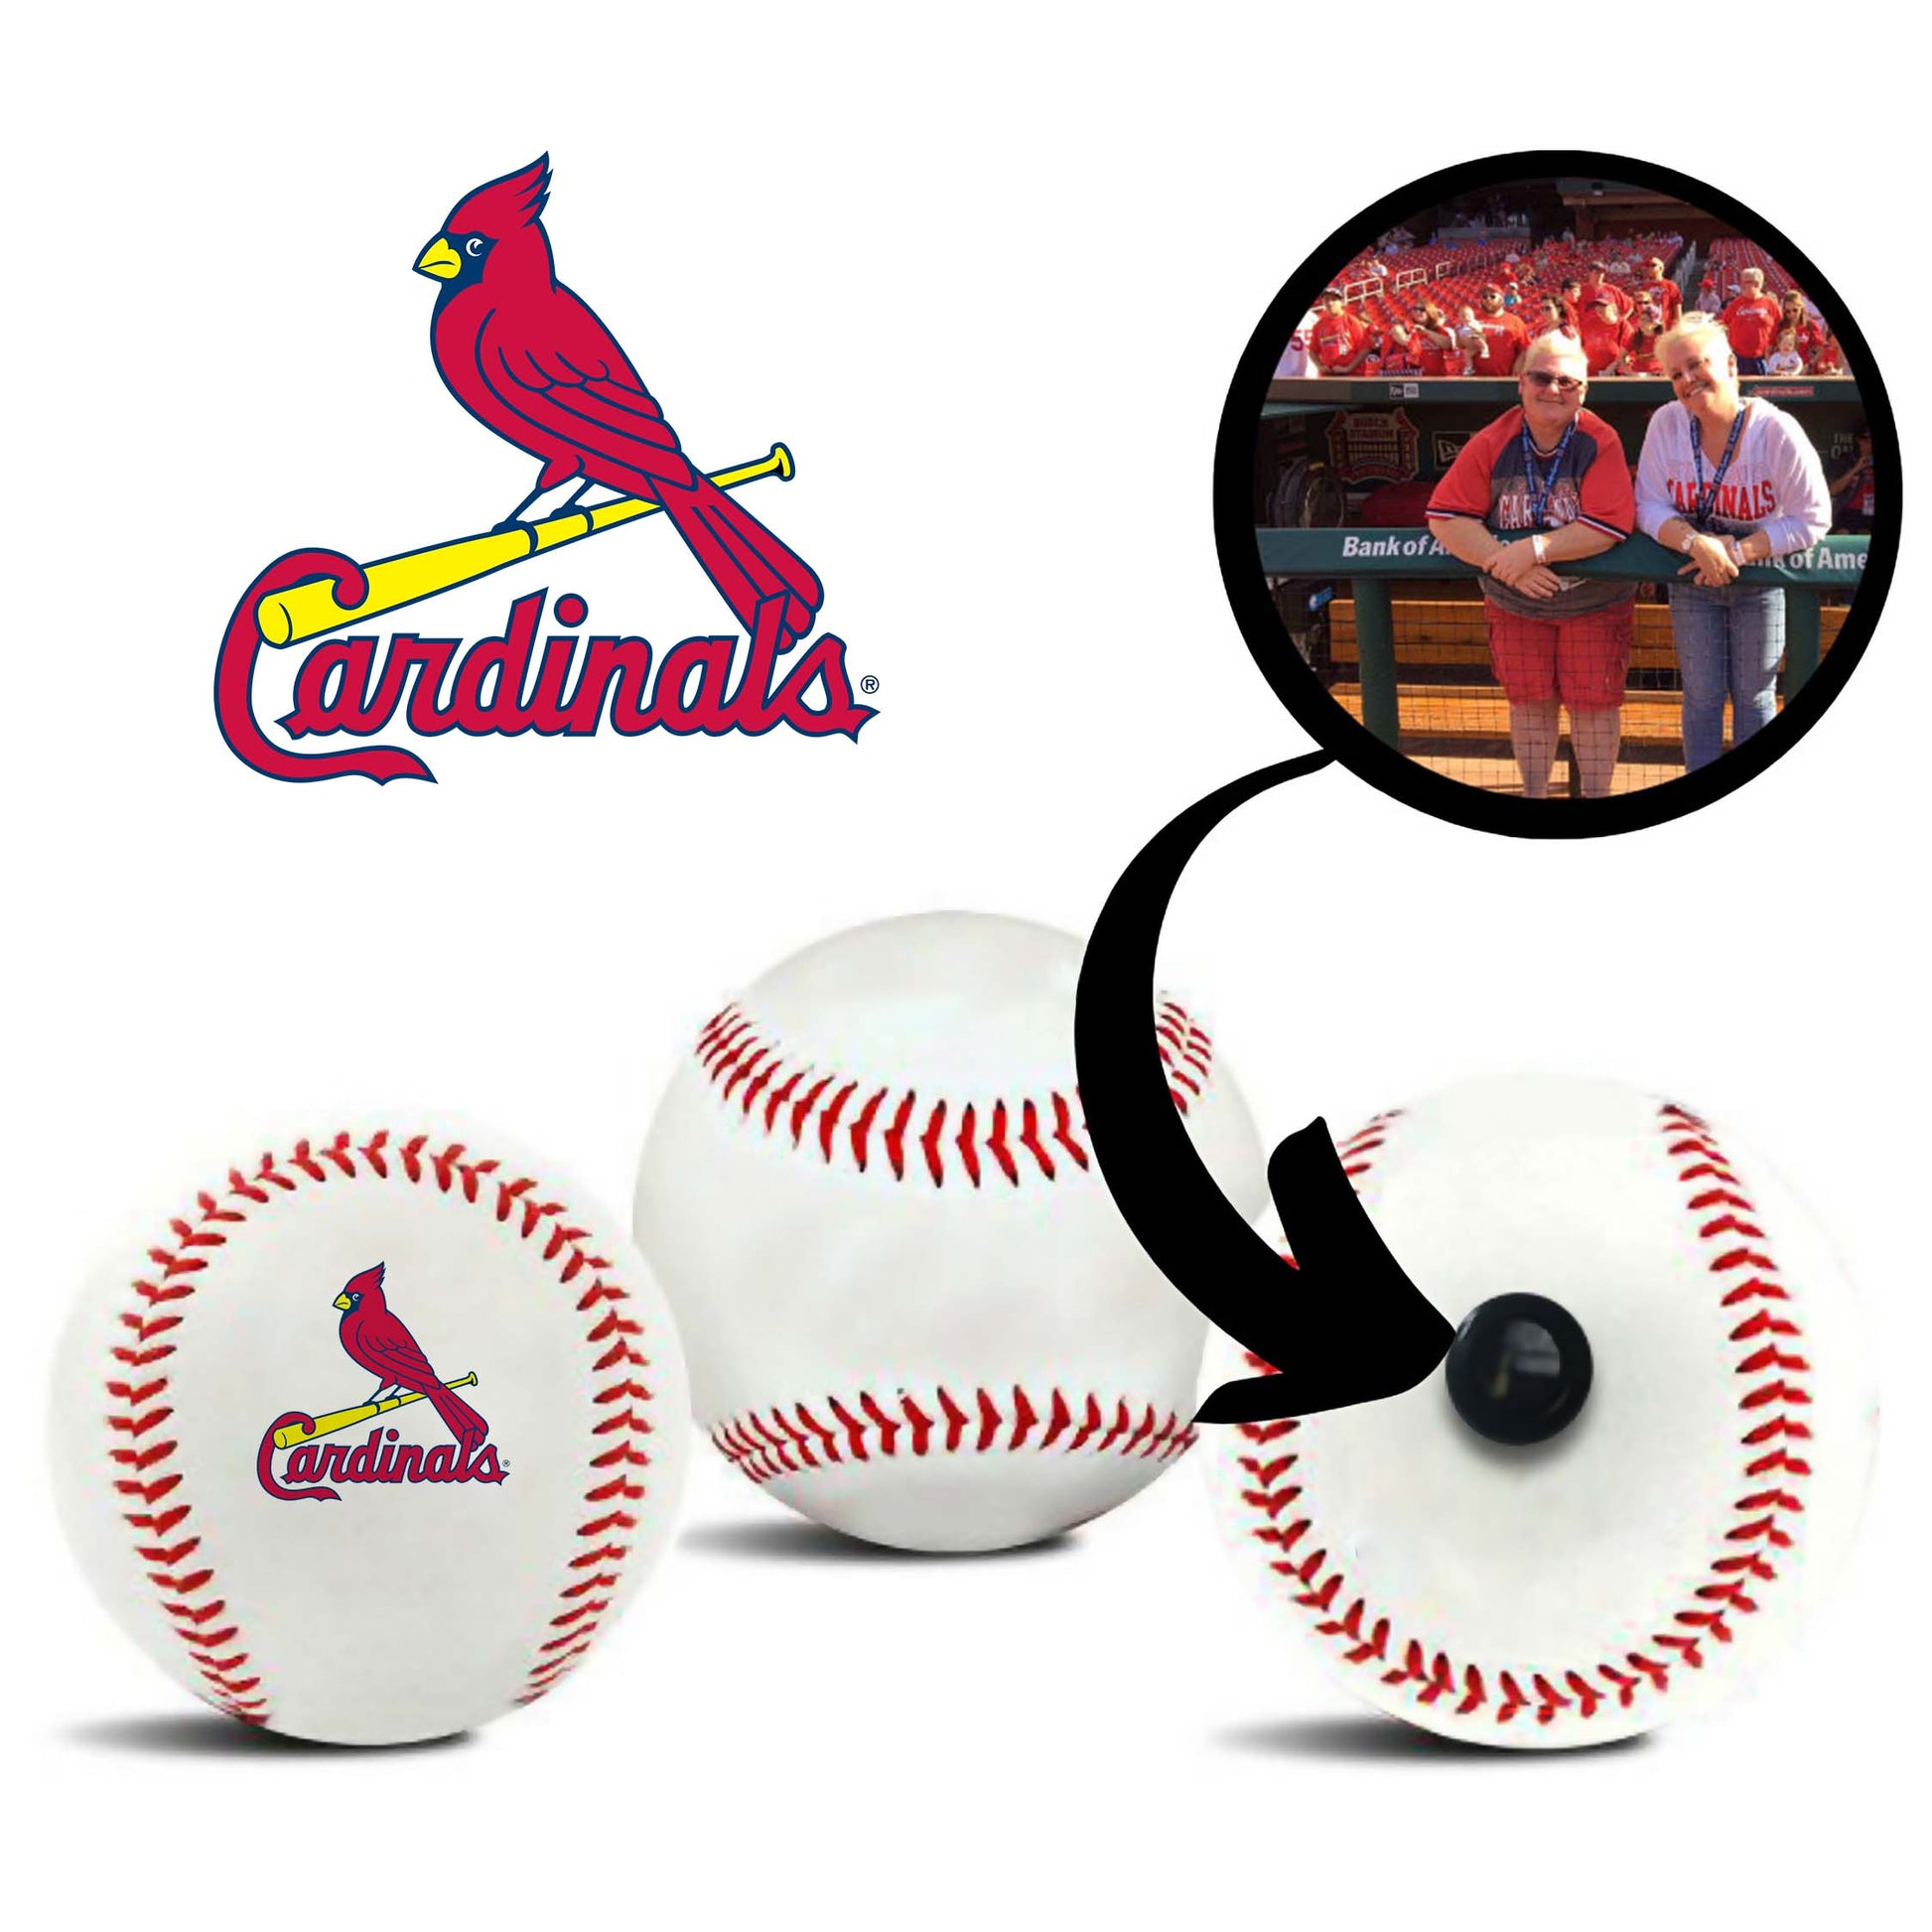 699 Cardinals Baseball Images, Stock Photos, 3D objects, & Vectors